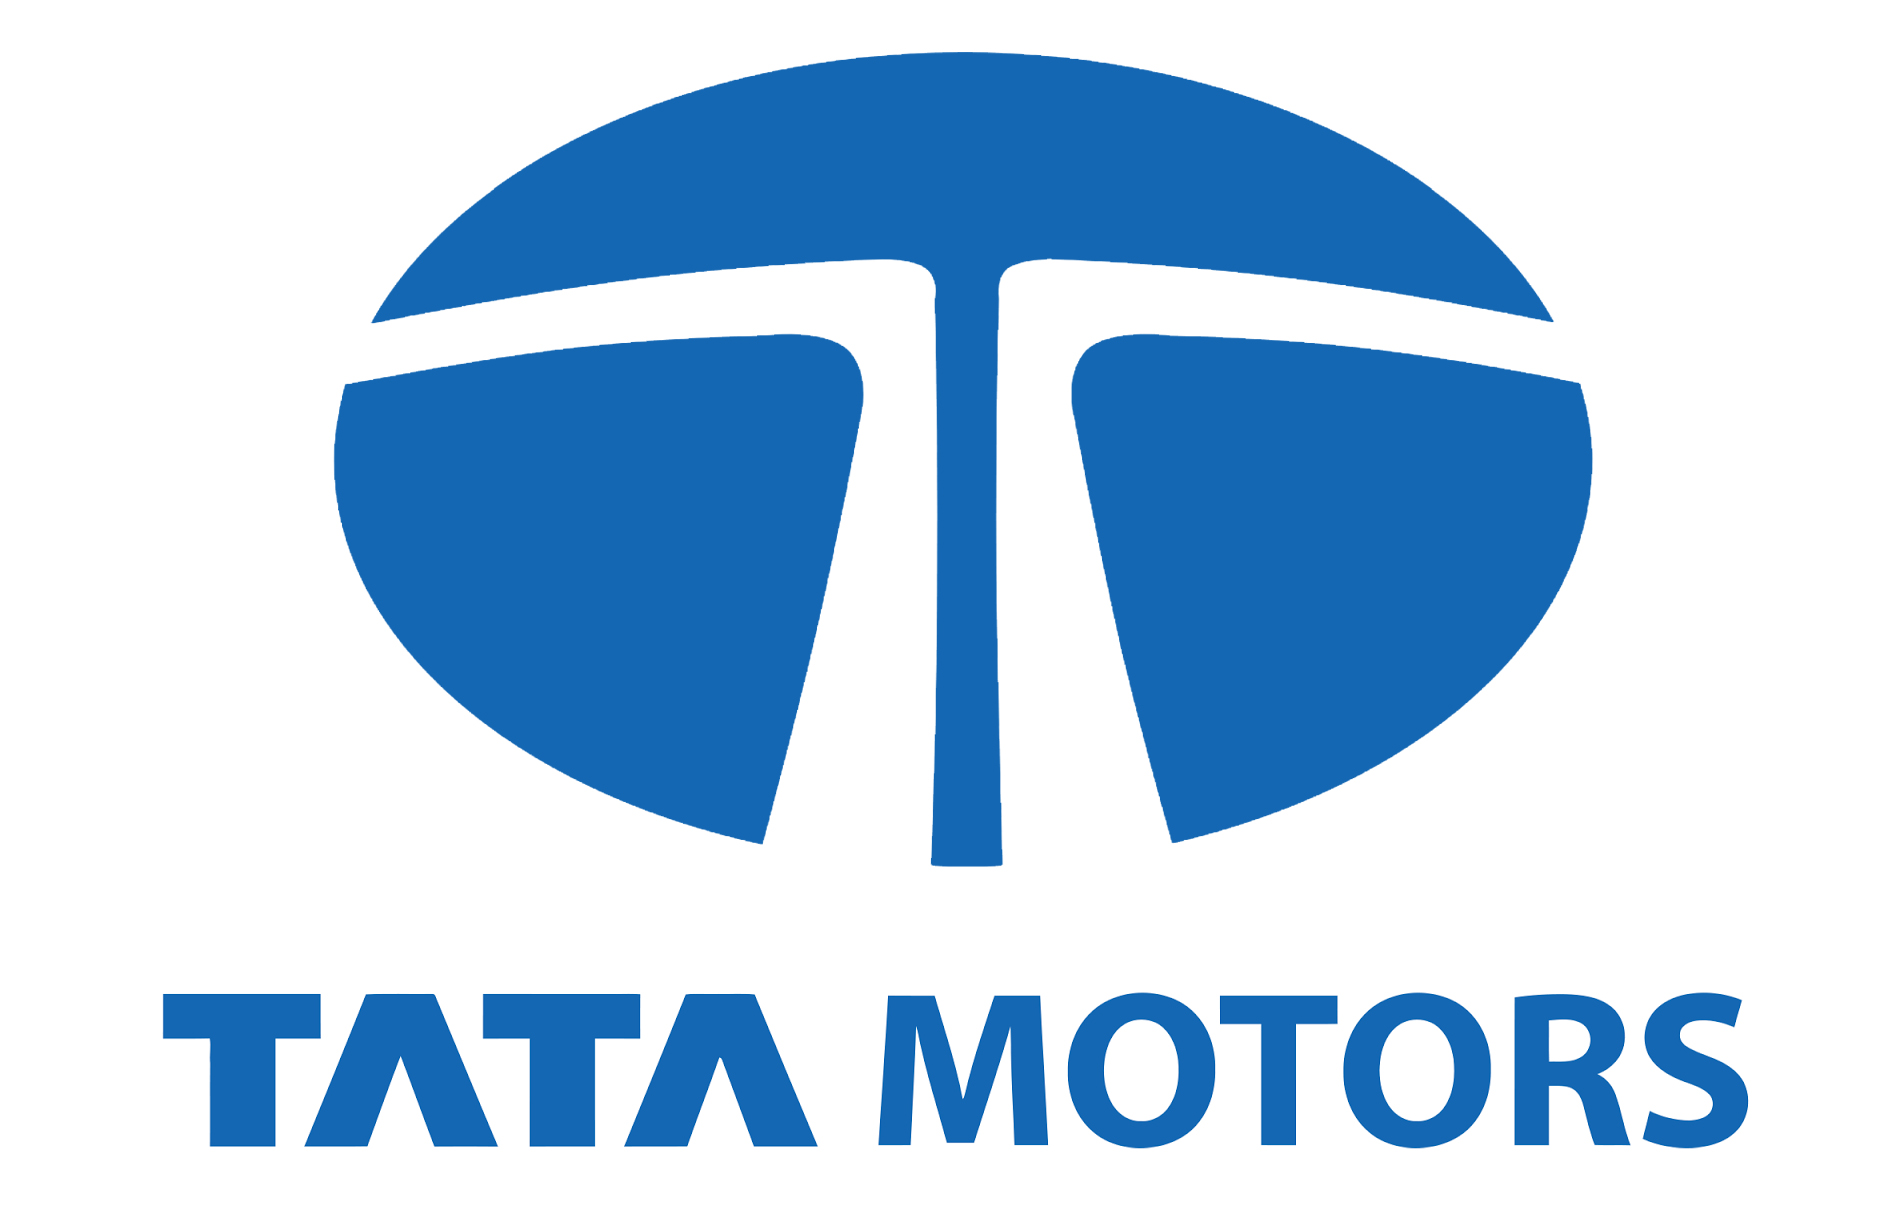 Tata Motors Cars Showroom - Puneet Cars|Repair Services|Automotive